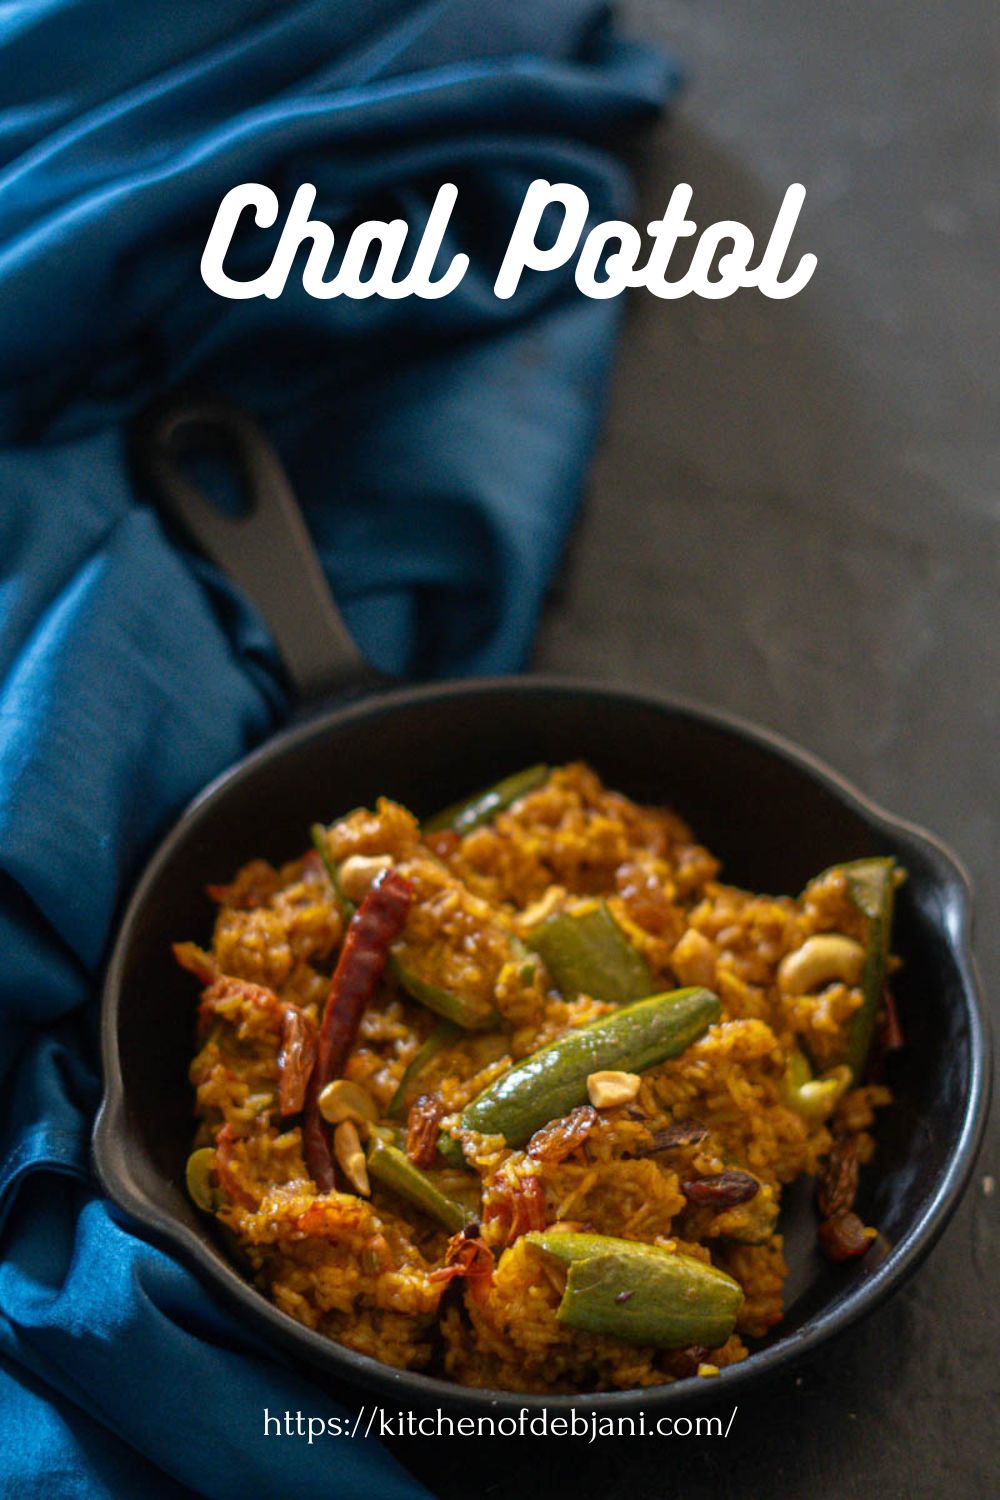 %Chal potol recipe Photo Food Pinterest Pin